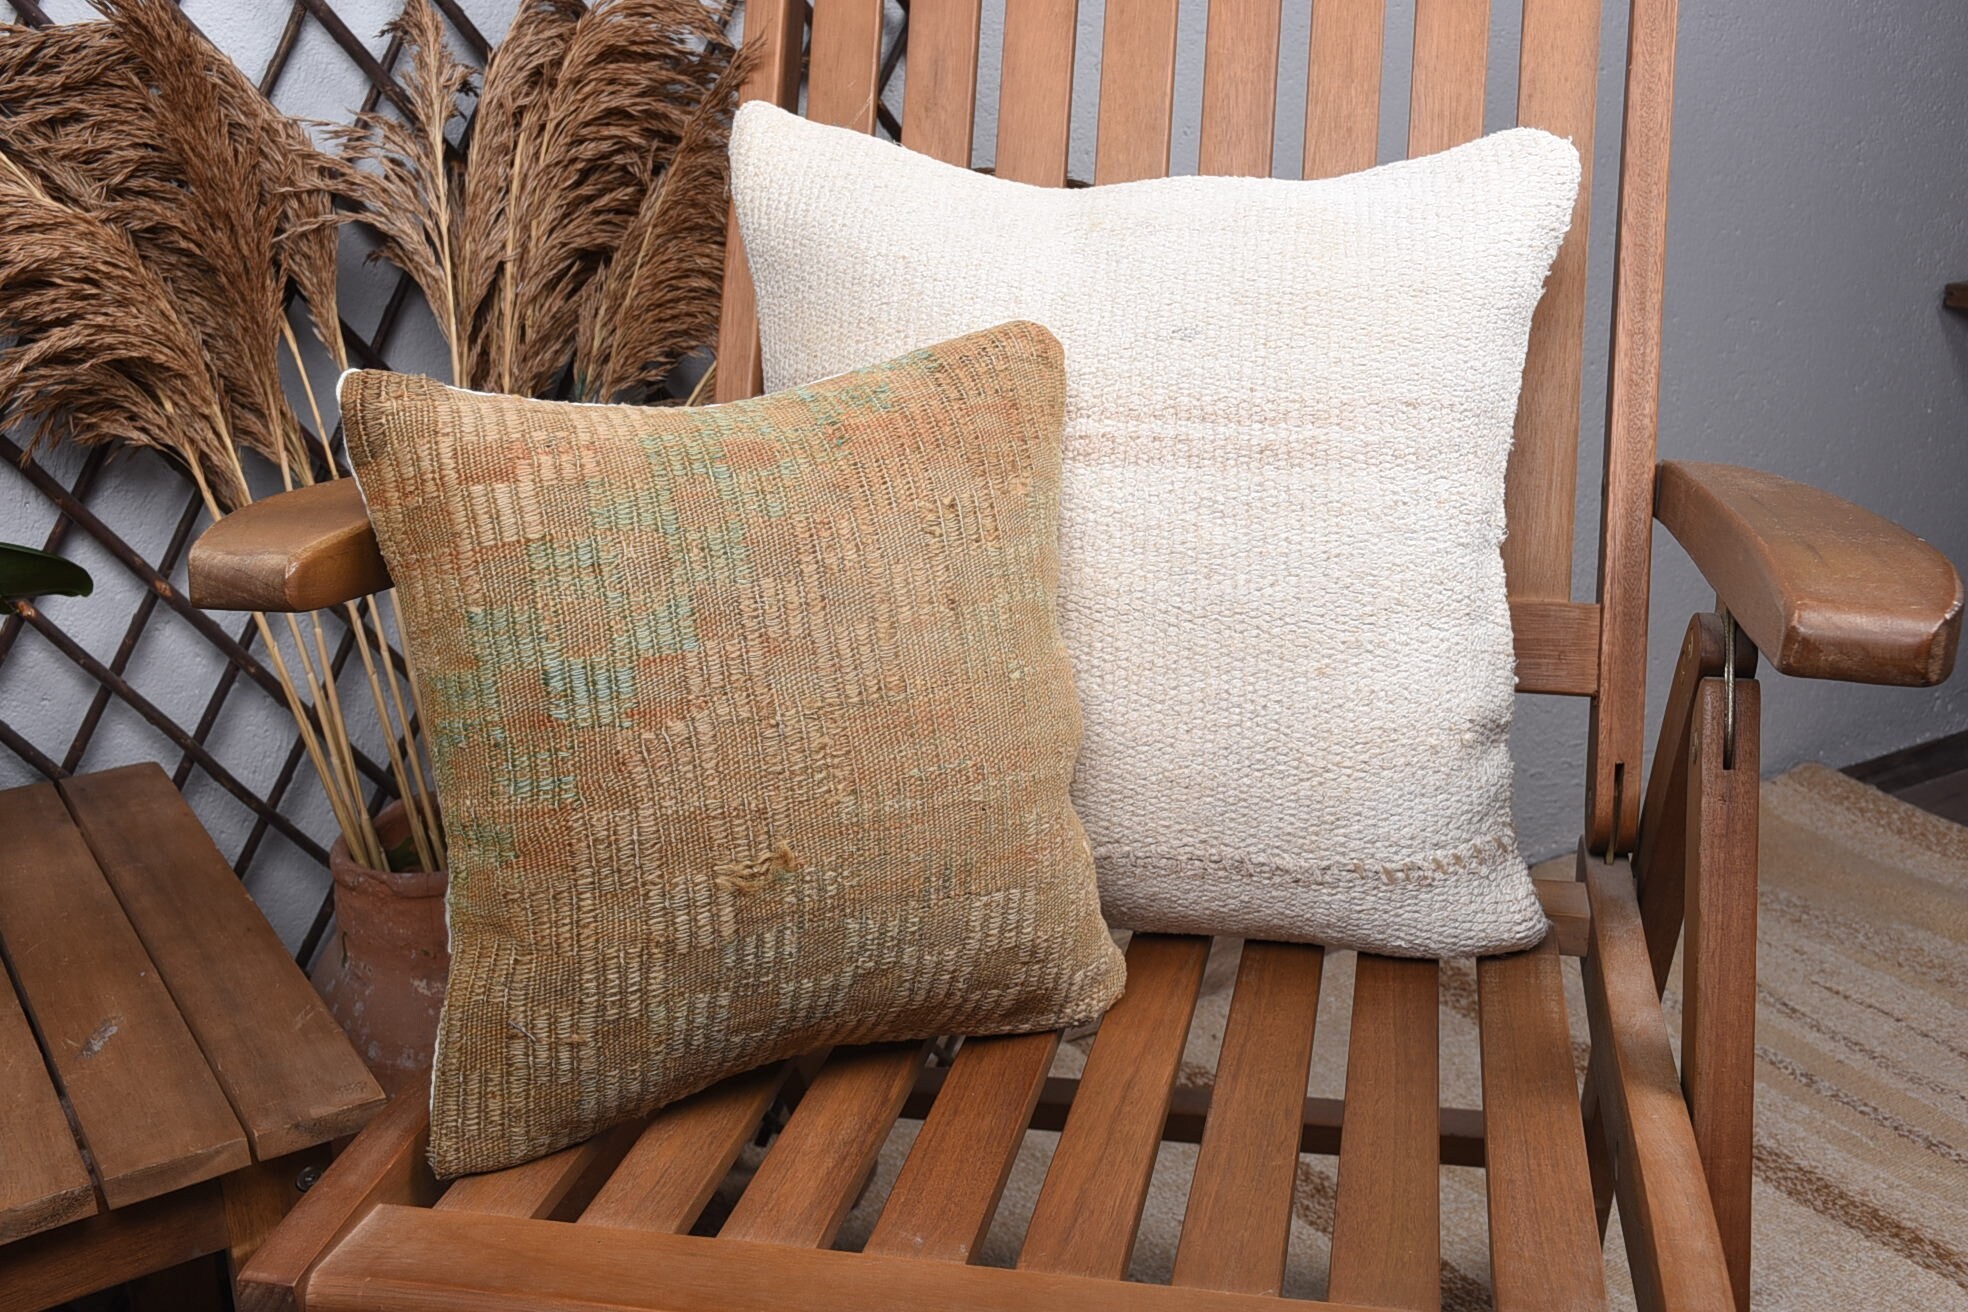 Kilim Pillow, Tribal Pillow Cover, Outdoor Patio Cushion, 12"x12" Brown Cushion Case, Boho Pillow, Kilim Pillow Cover